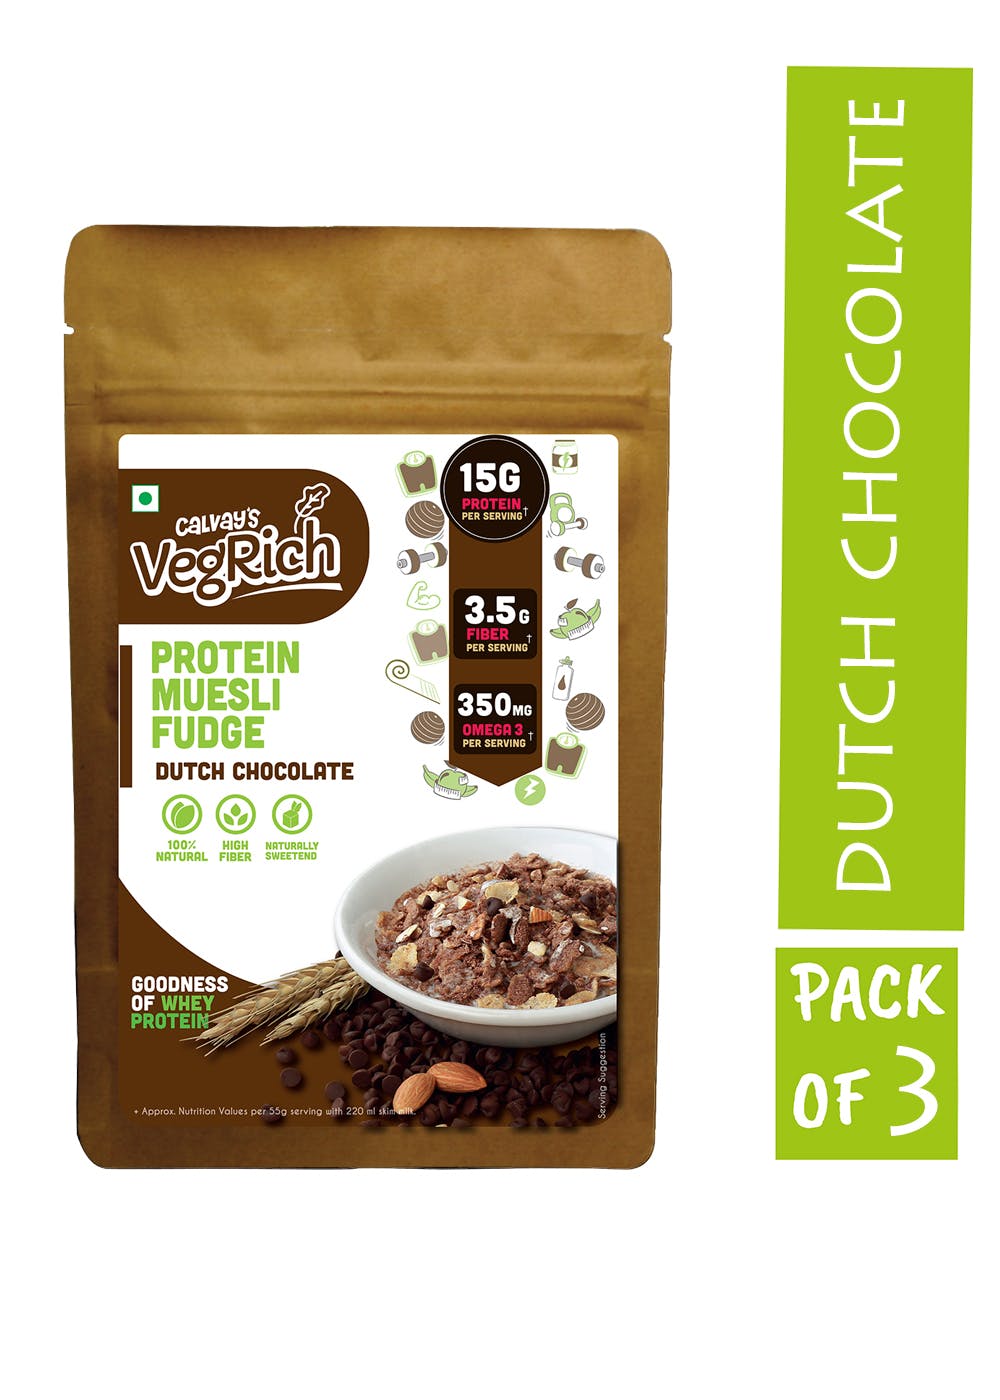 VegRich Protein Muesli Fudge: Dutch Chocolate - Trial Pack of 3 Servings